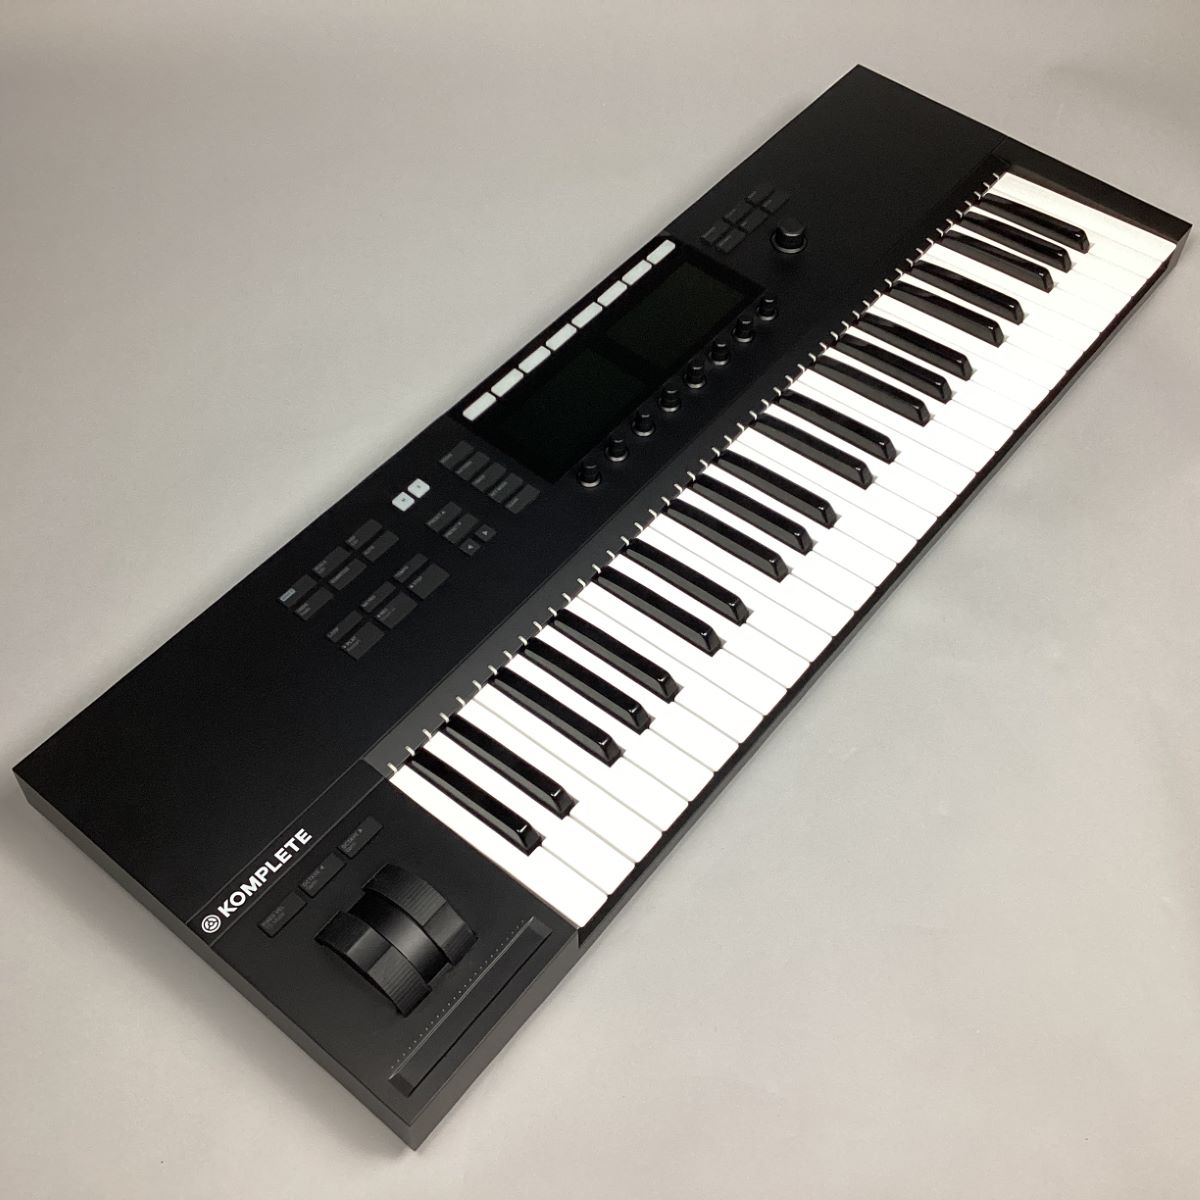 KOMPLETE KONTROL S49 MK2 MIDIキーボード